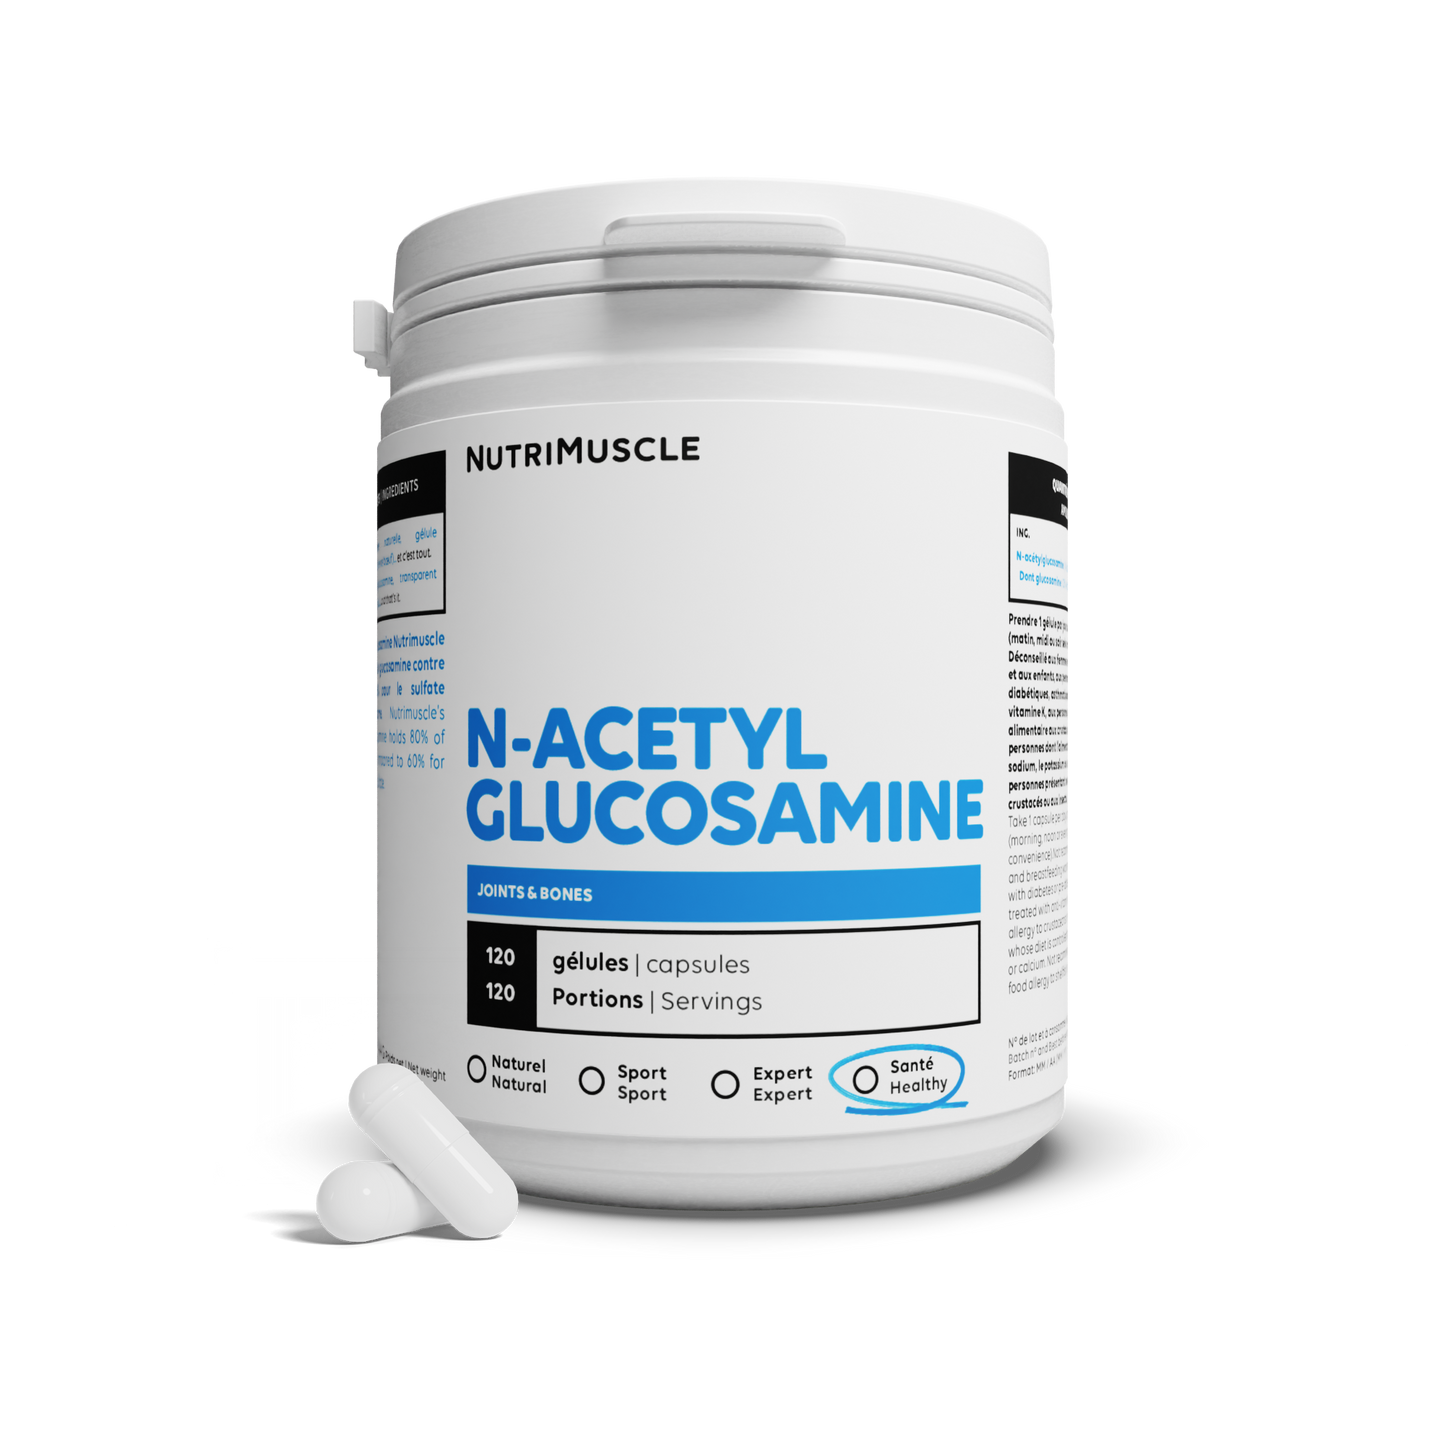 Glucosamine (n-acetylglucosamine) in capsules